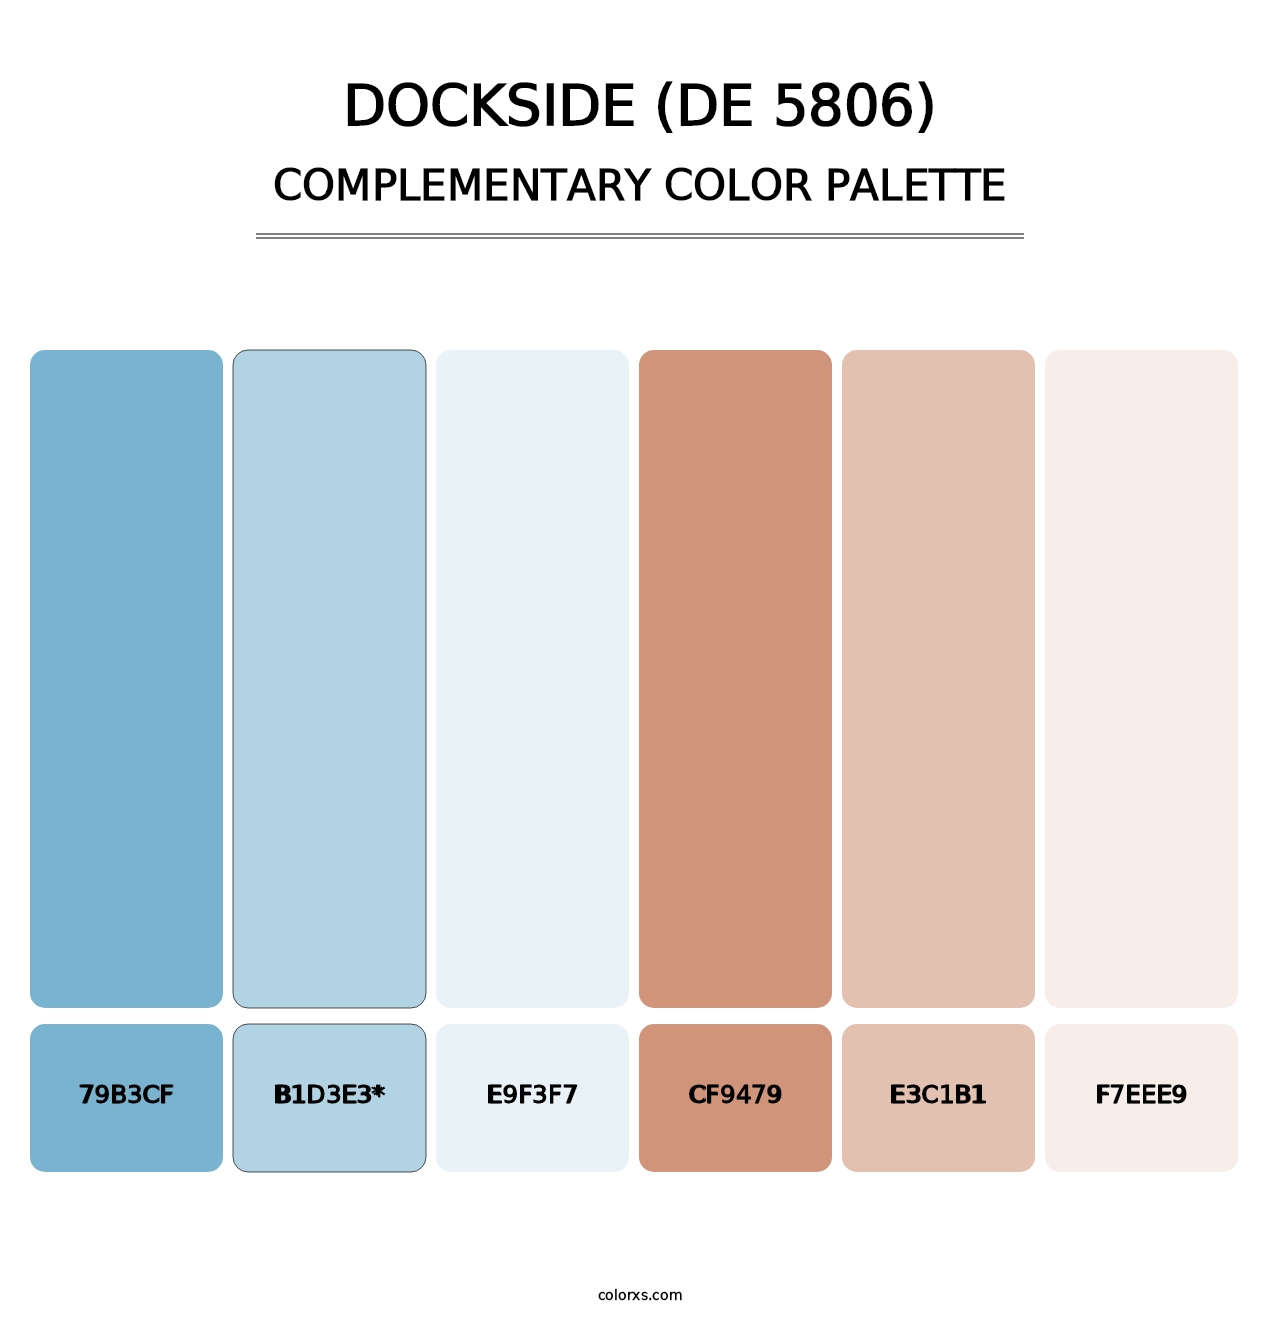 Dockside (DE 5806) - Complementary Color Palette